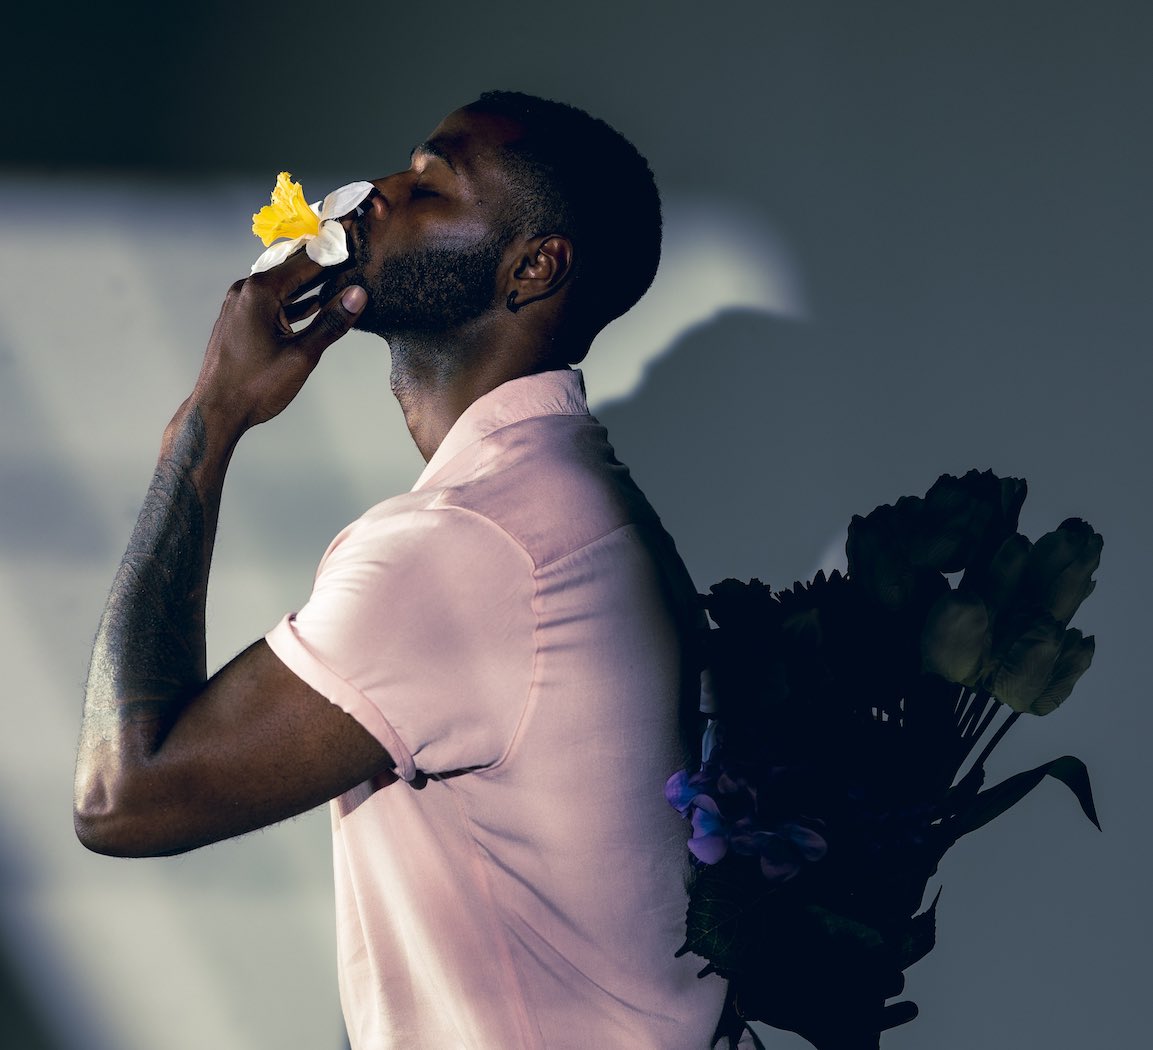 Bloom at your own speed 🌸

📸 Mimi Johnson 
#blackphotographer #flower #howlcooper